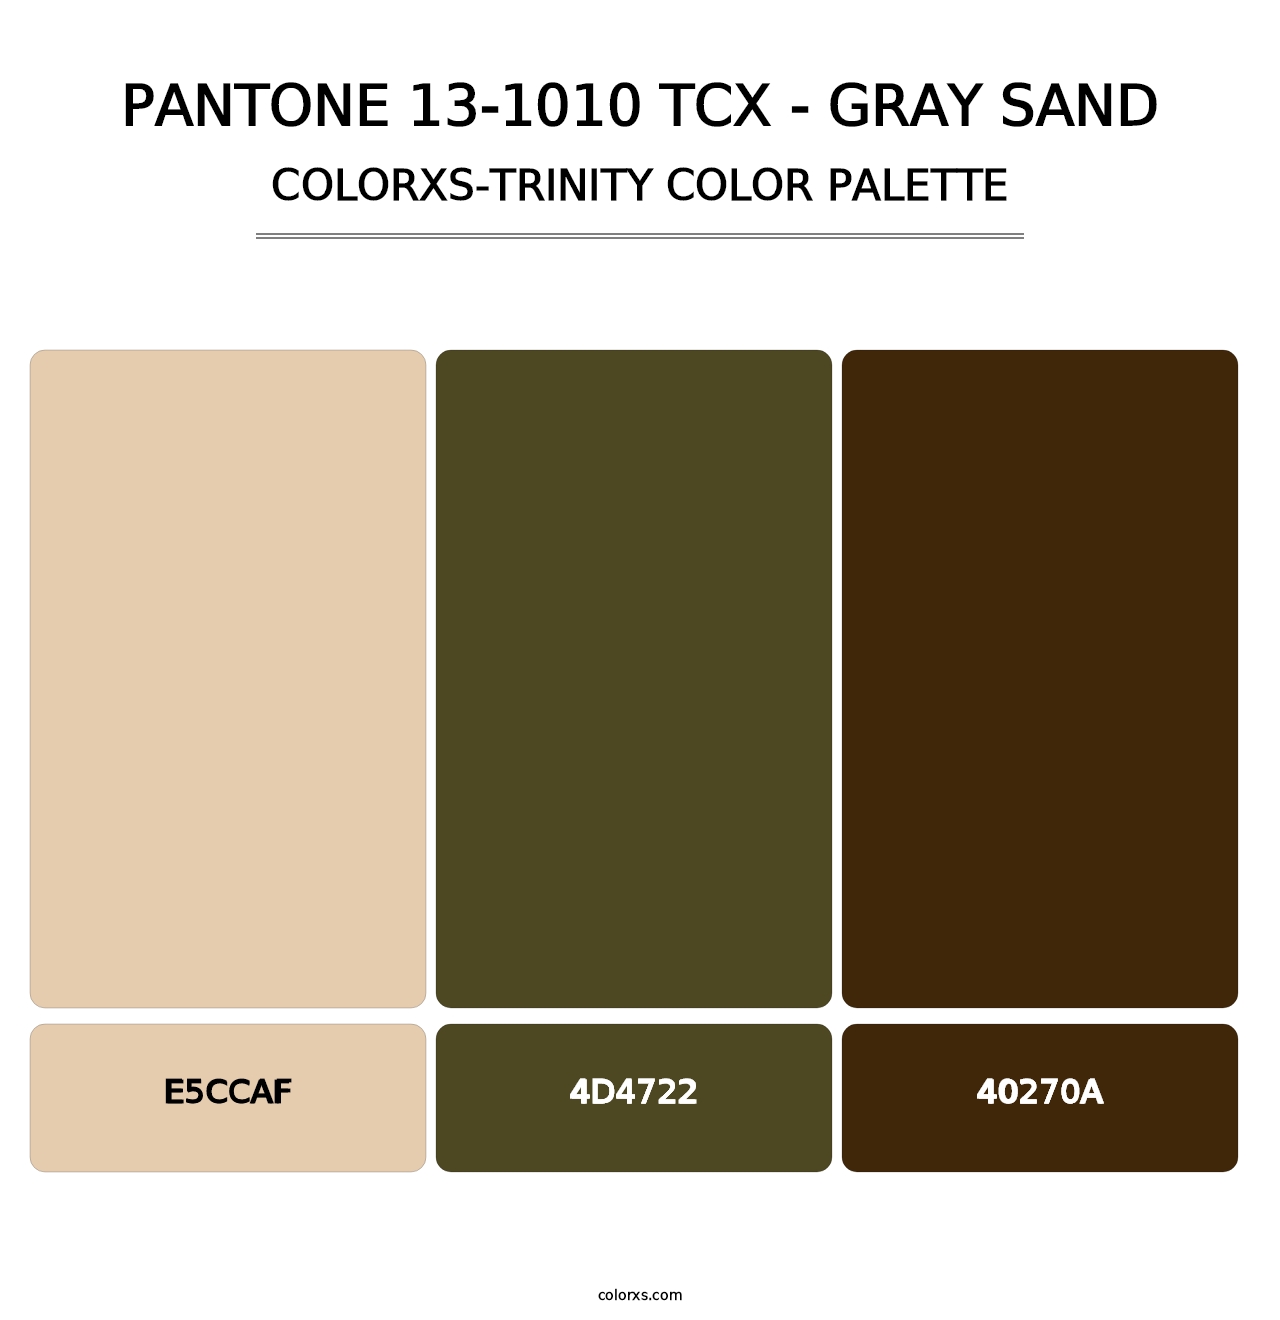 PANTONE 13-1010 TCX - Gray Sand - Colorxs Trinity Palette